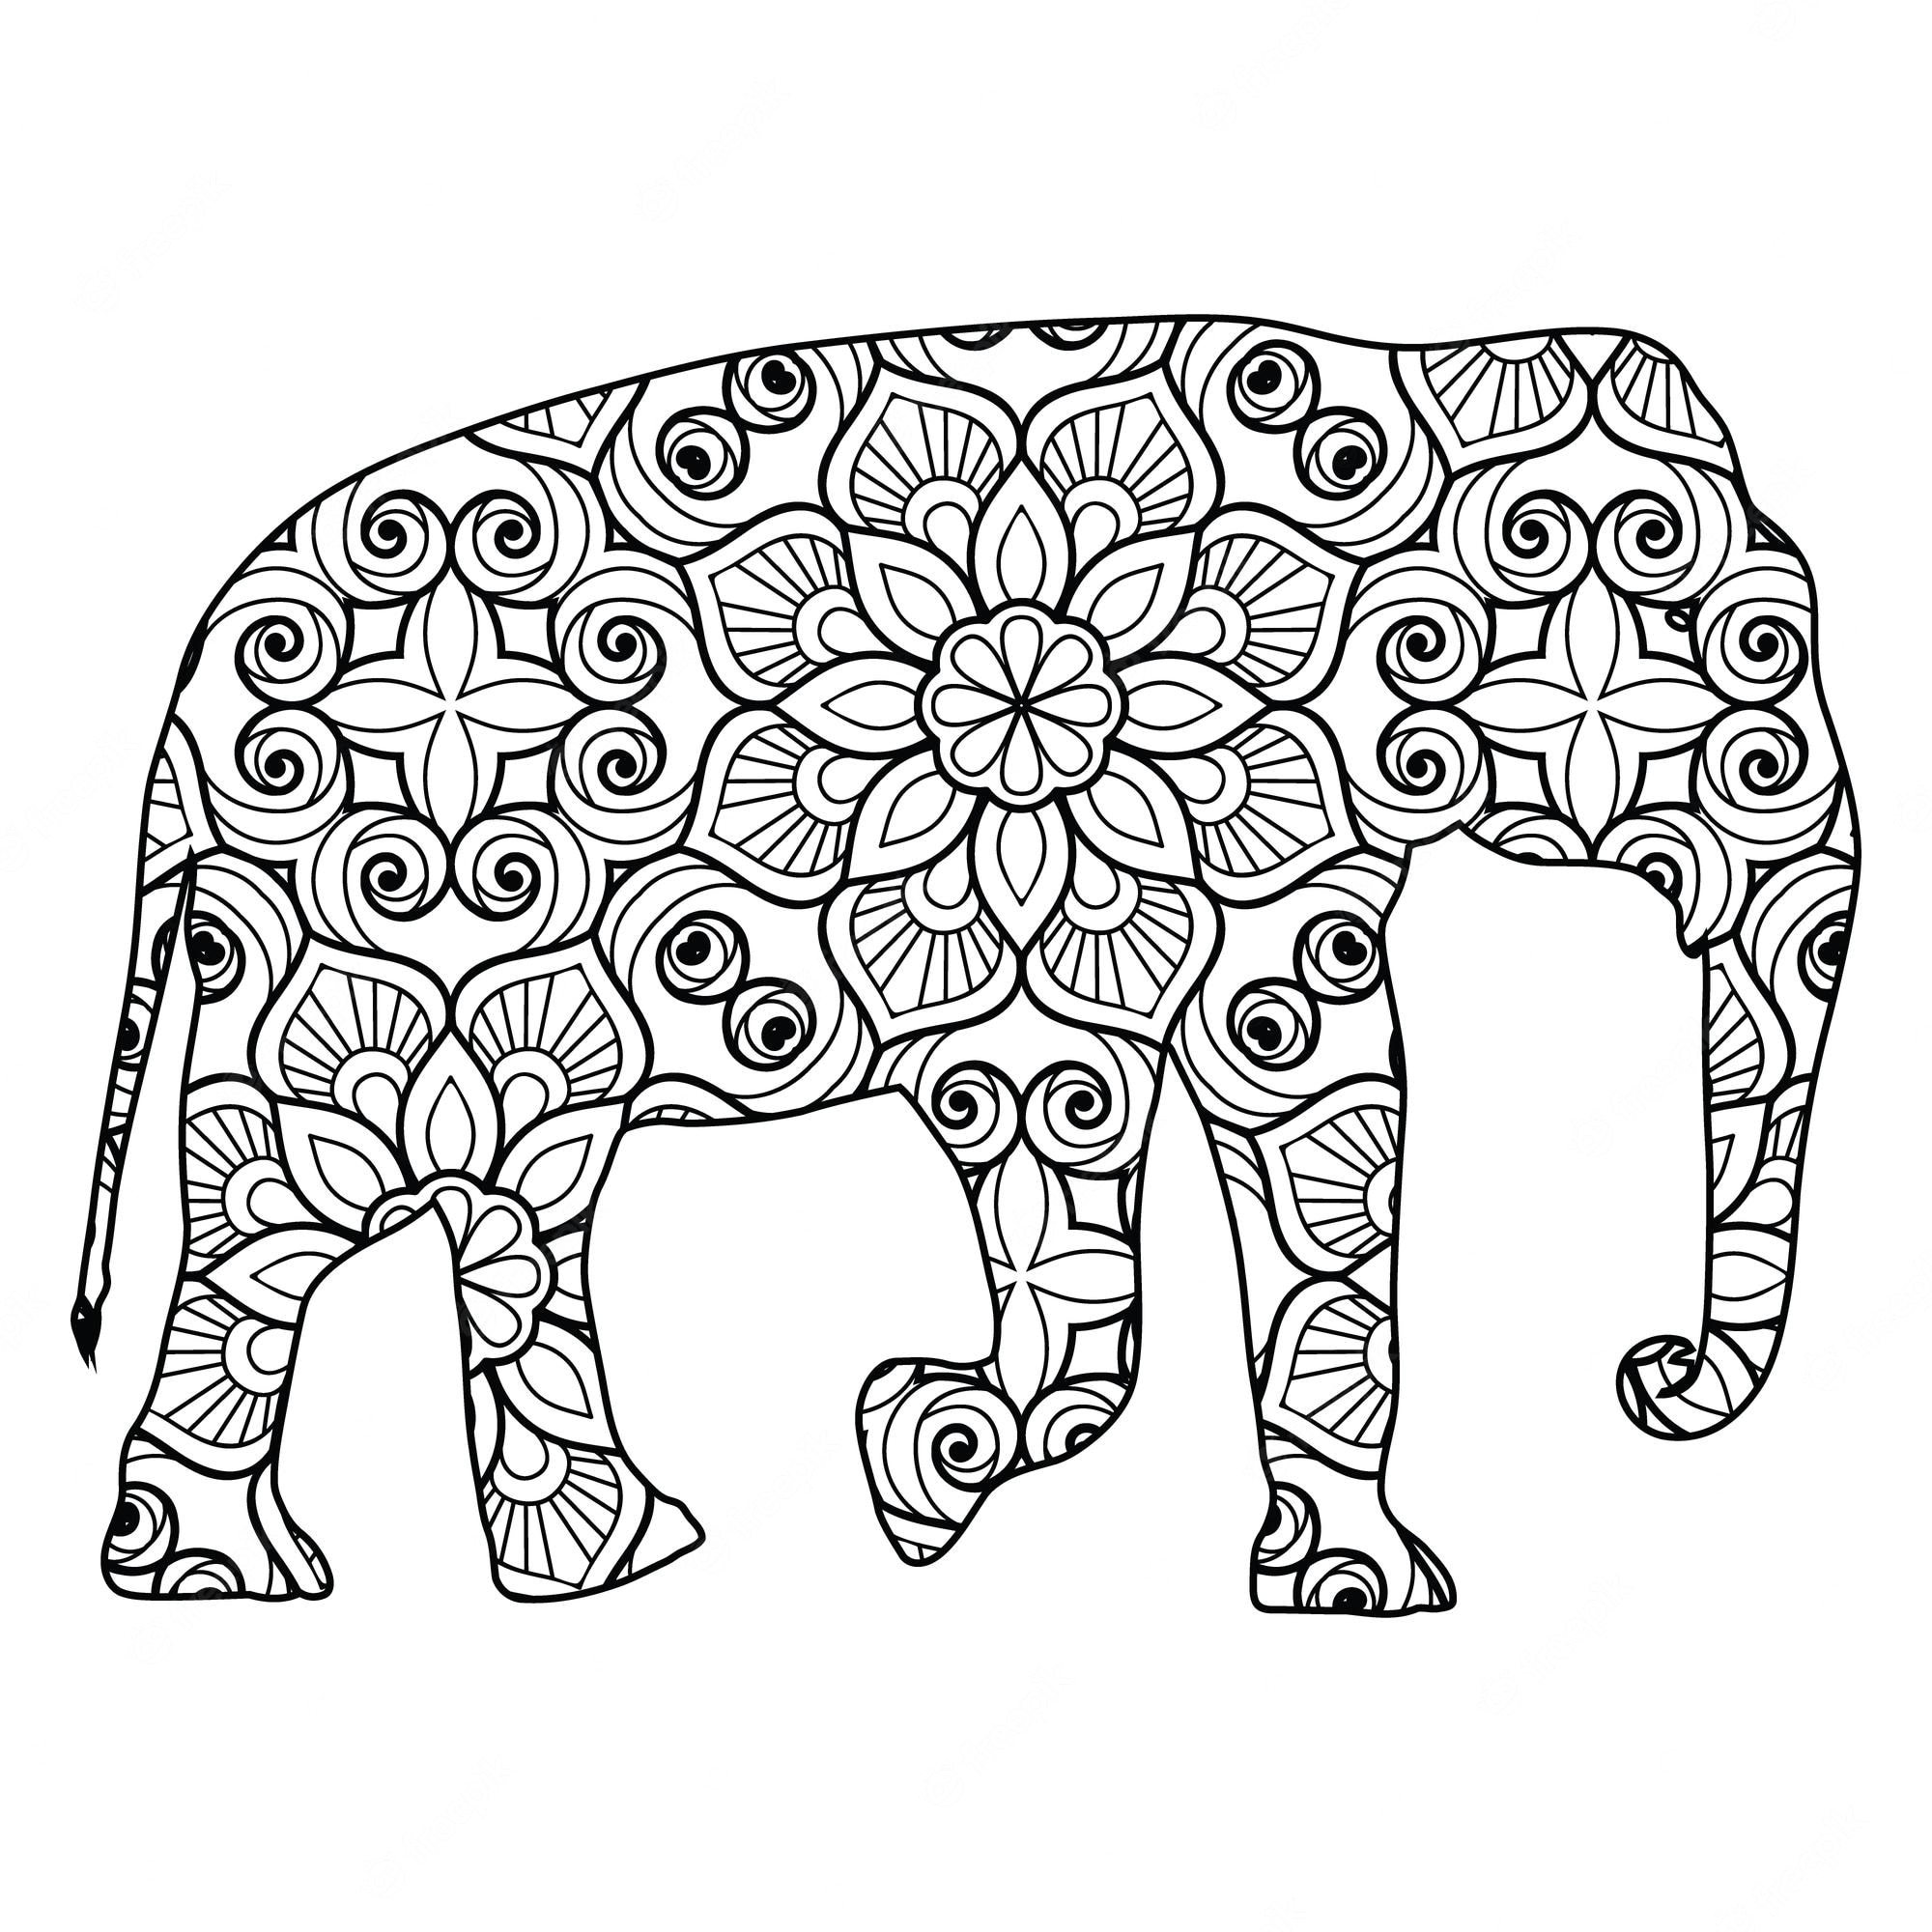 Premium Vector | Mandala elephant coloring page for kids